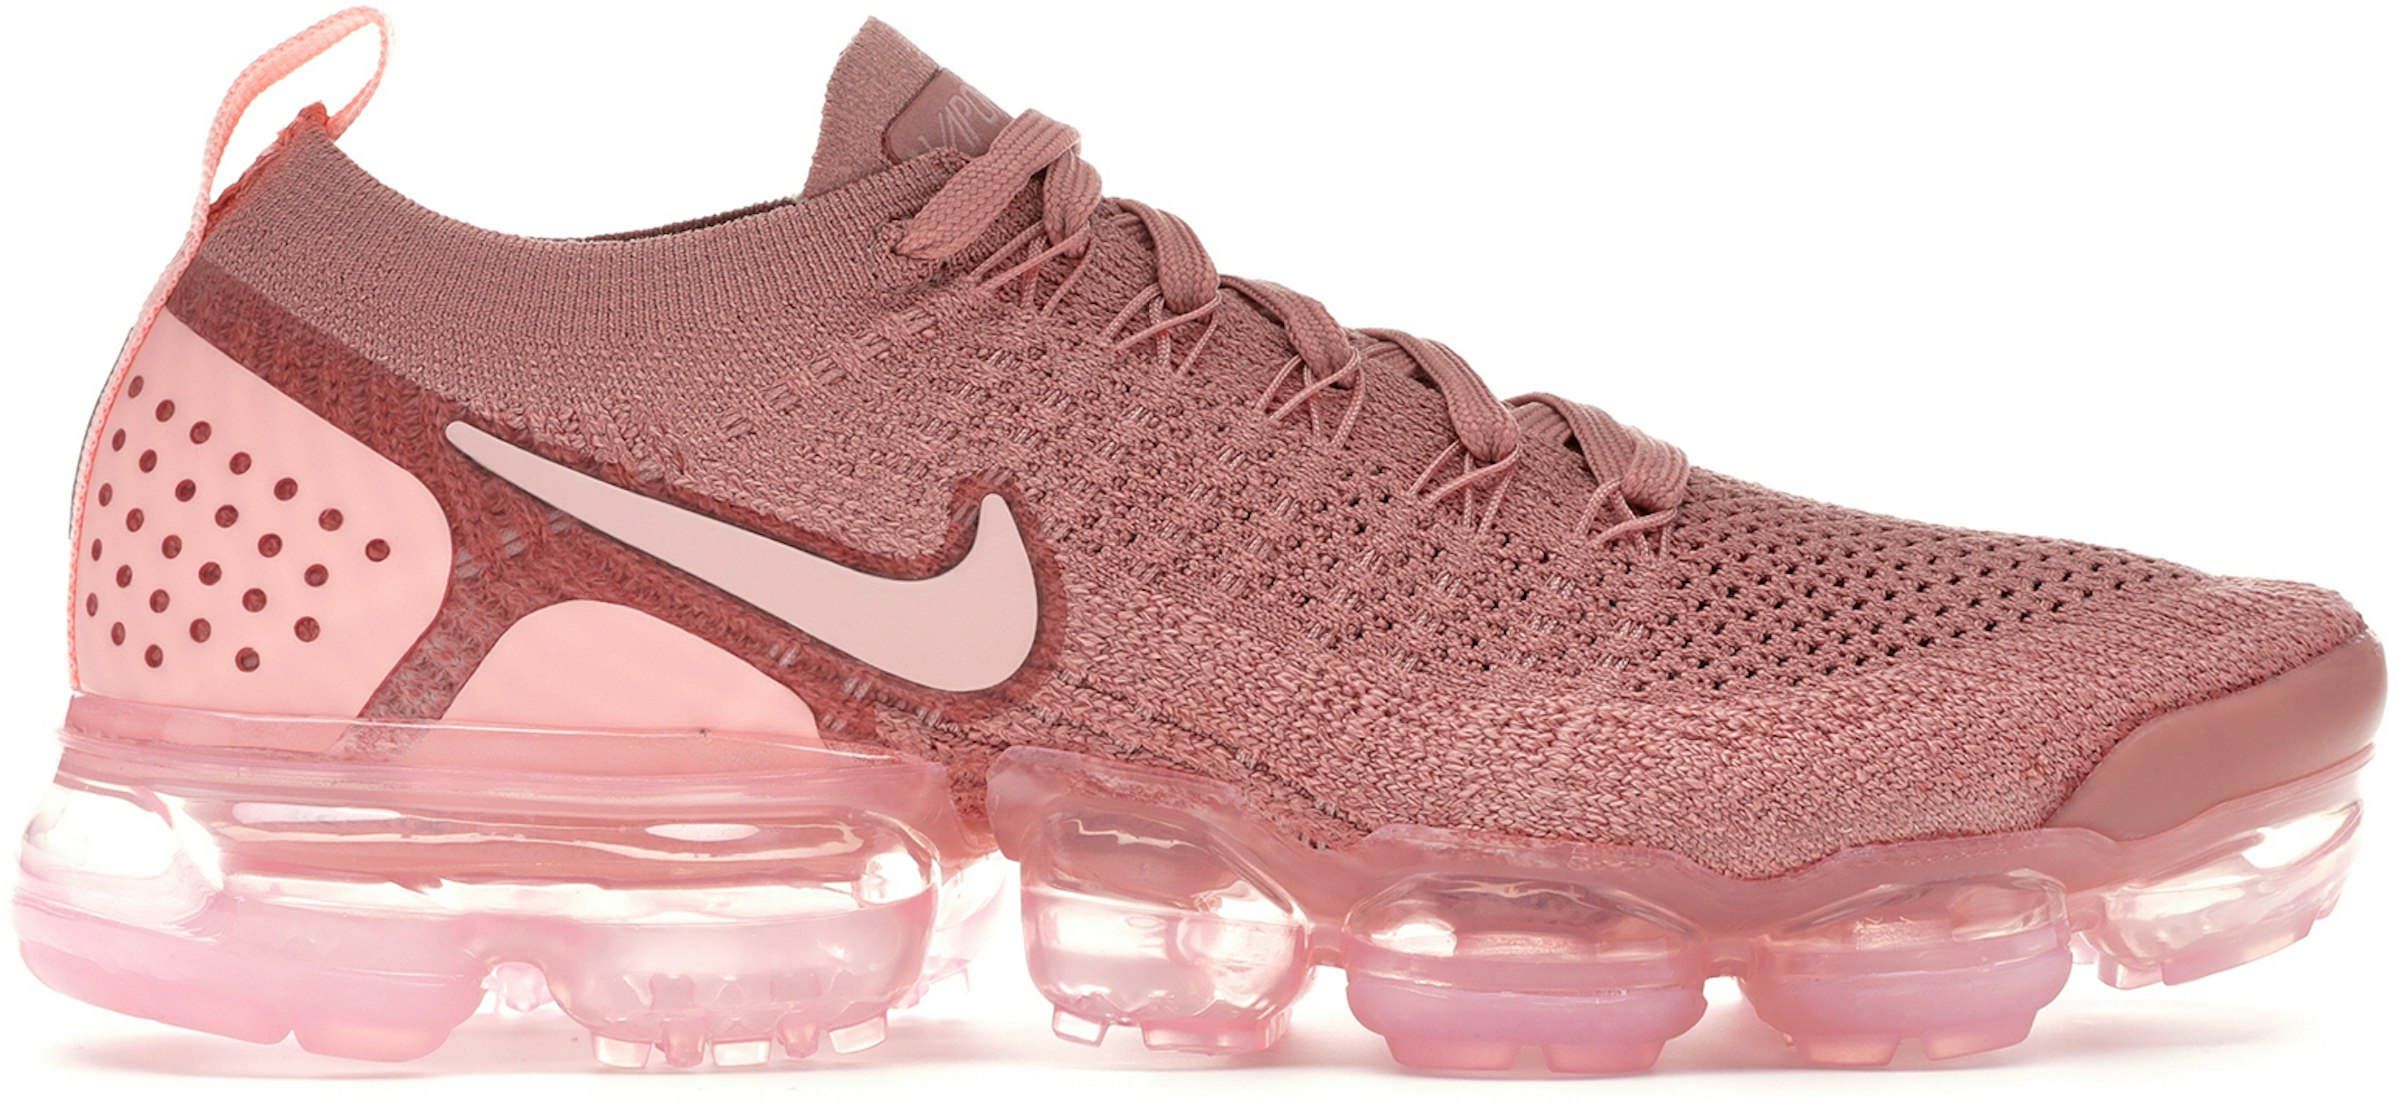 Nike Air VaporMax 2 Pink (Women's) - 942843-600